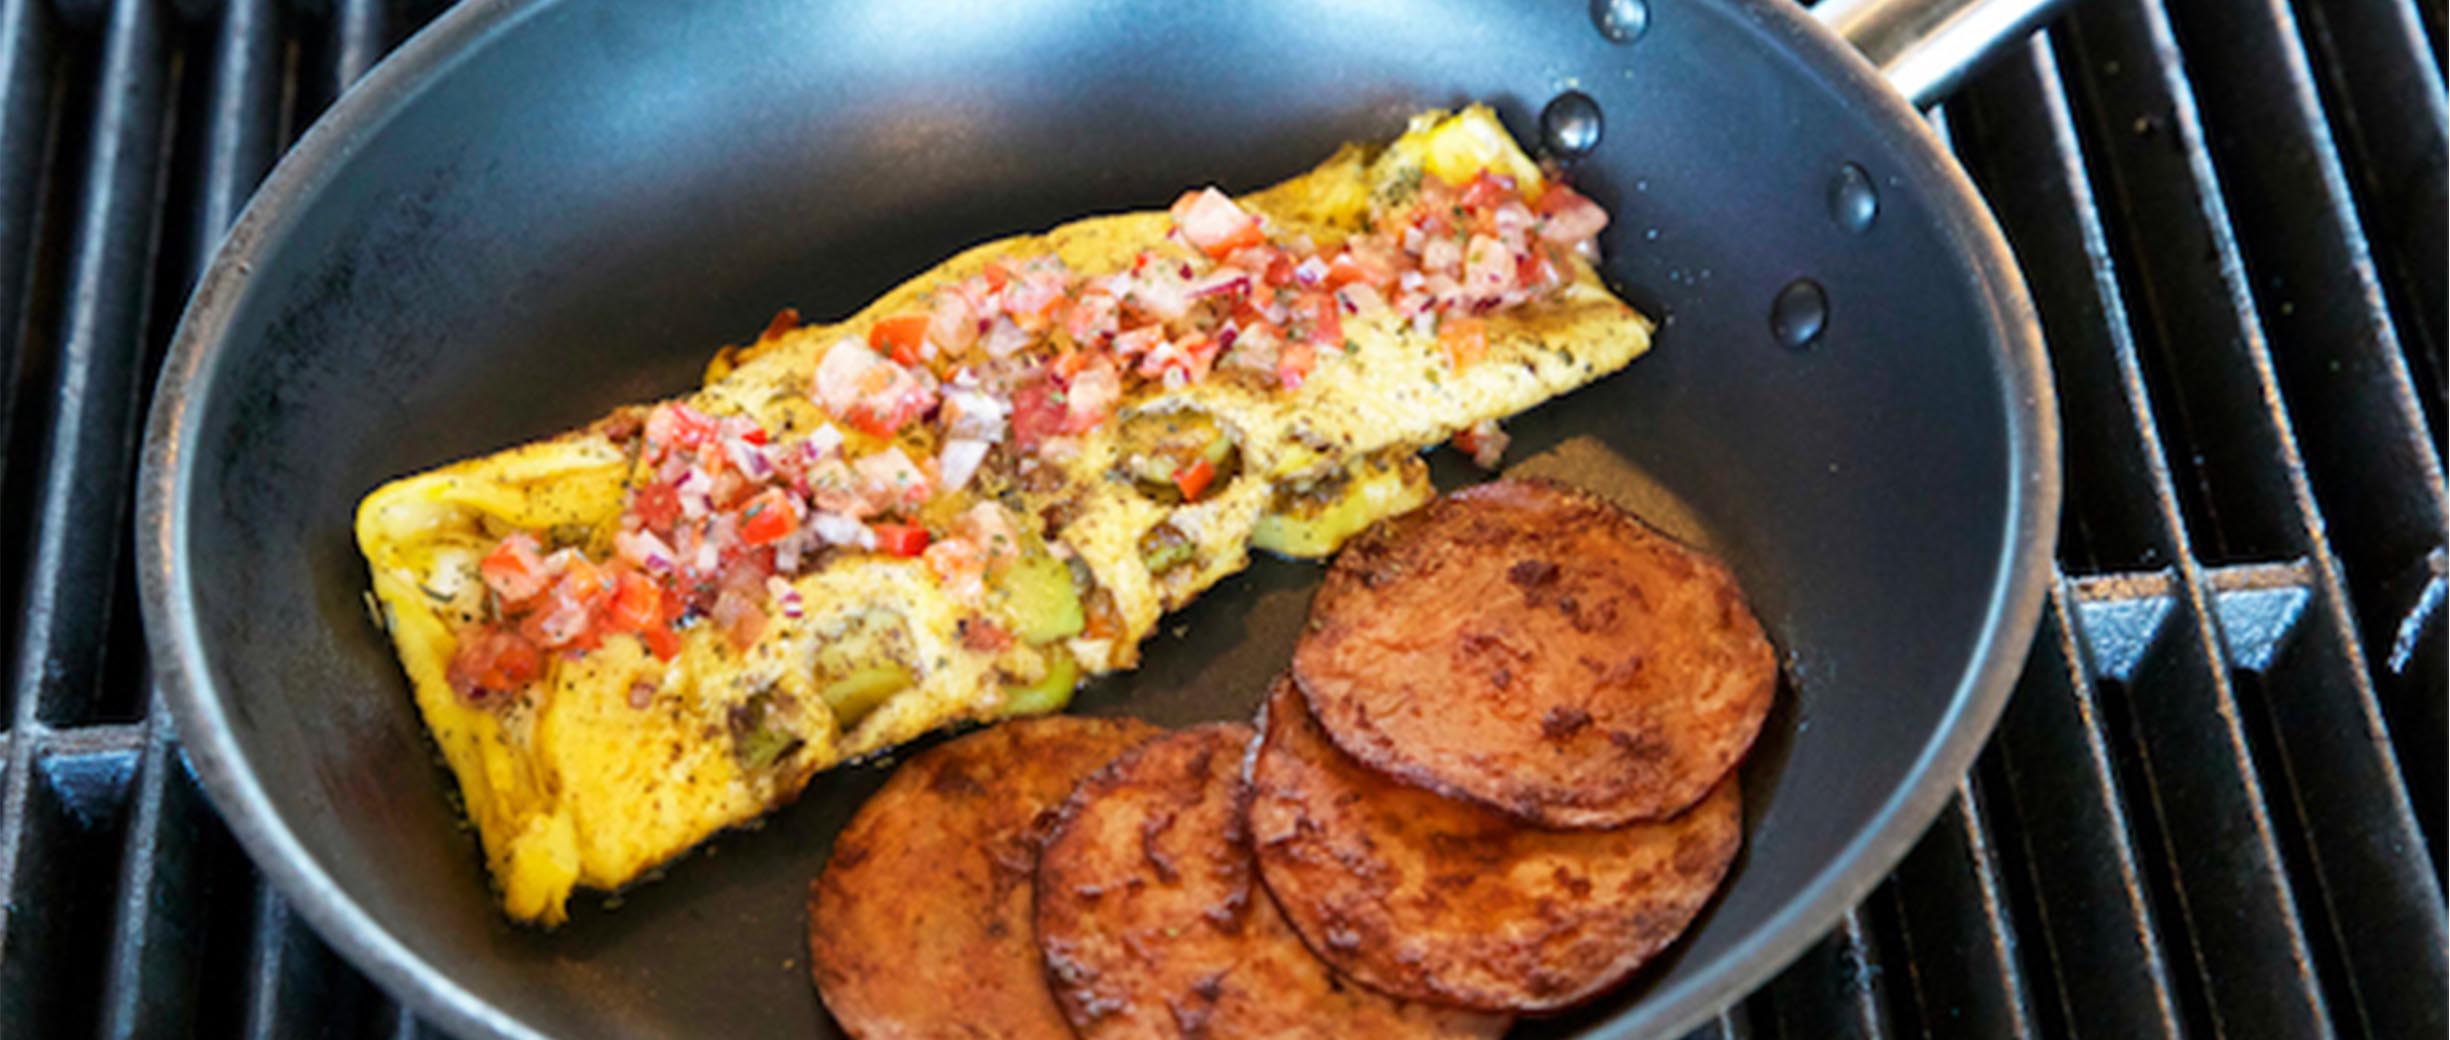 Southwest Breakfast Omelette